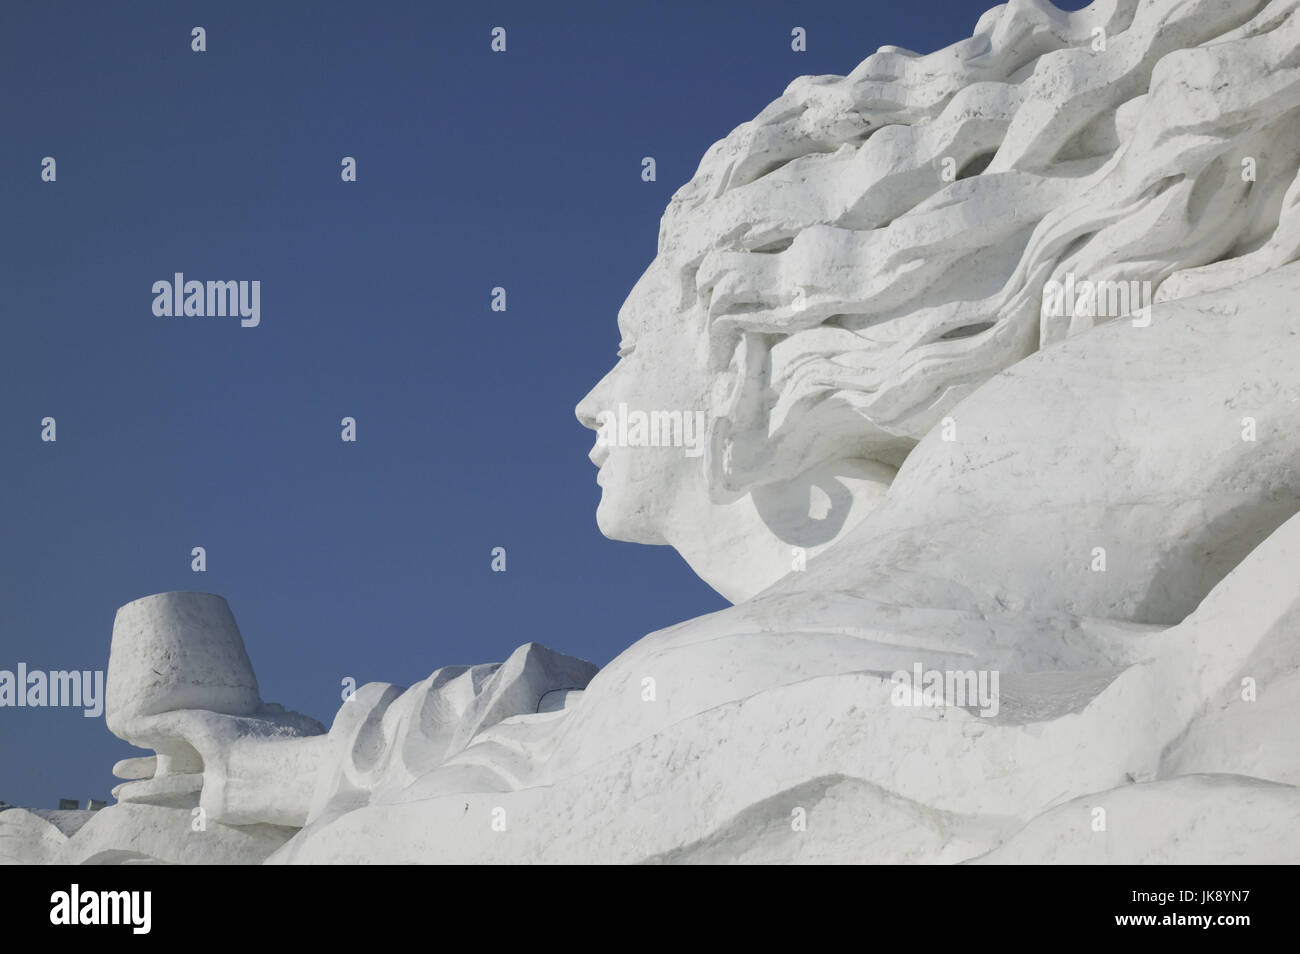 China, Heilongjiang, Harbin, Schnee- und Eisskulpturen Festival, Kunstwerk, Schneeskulptur, Foto de stock